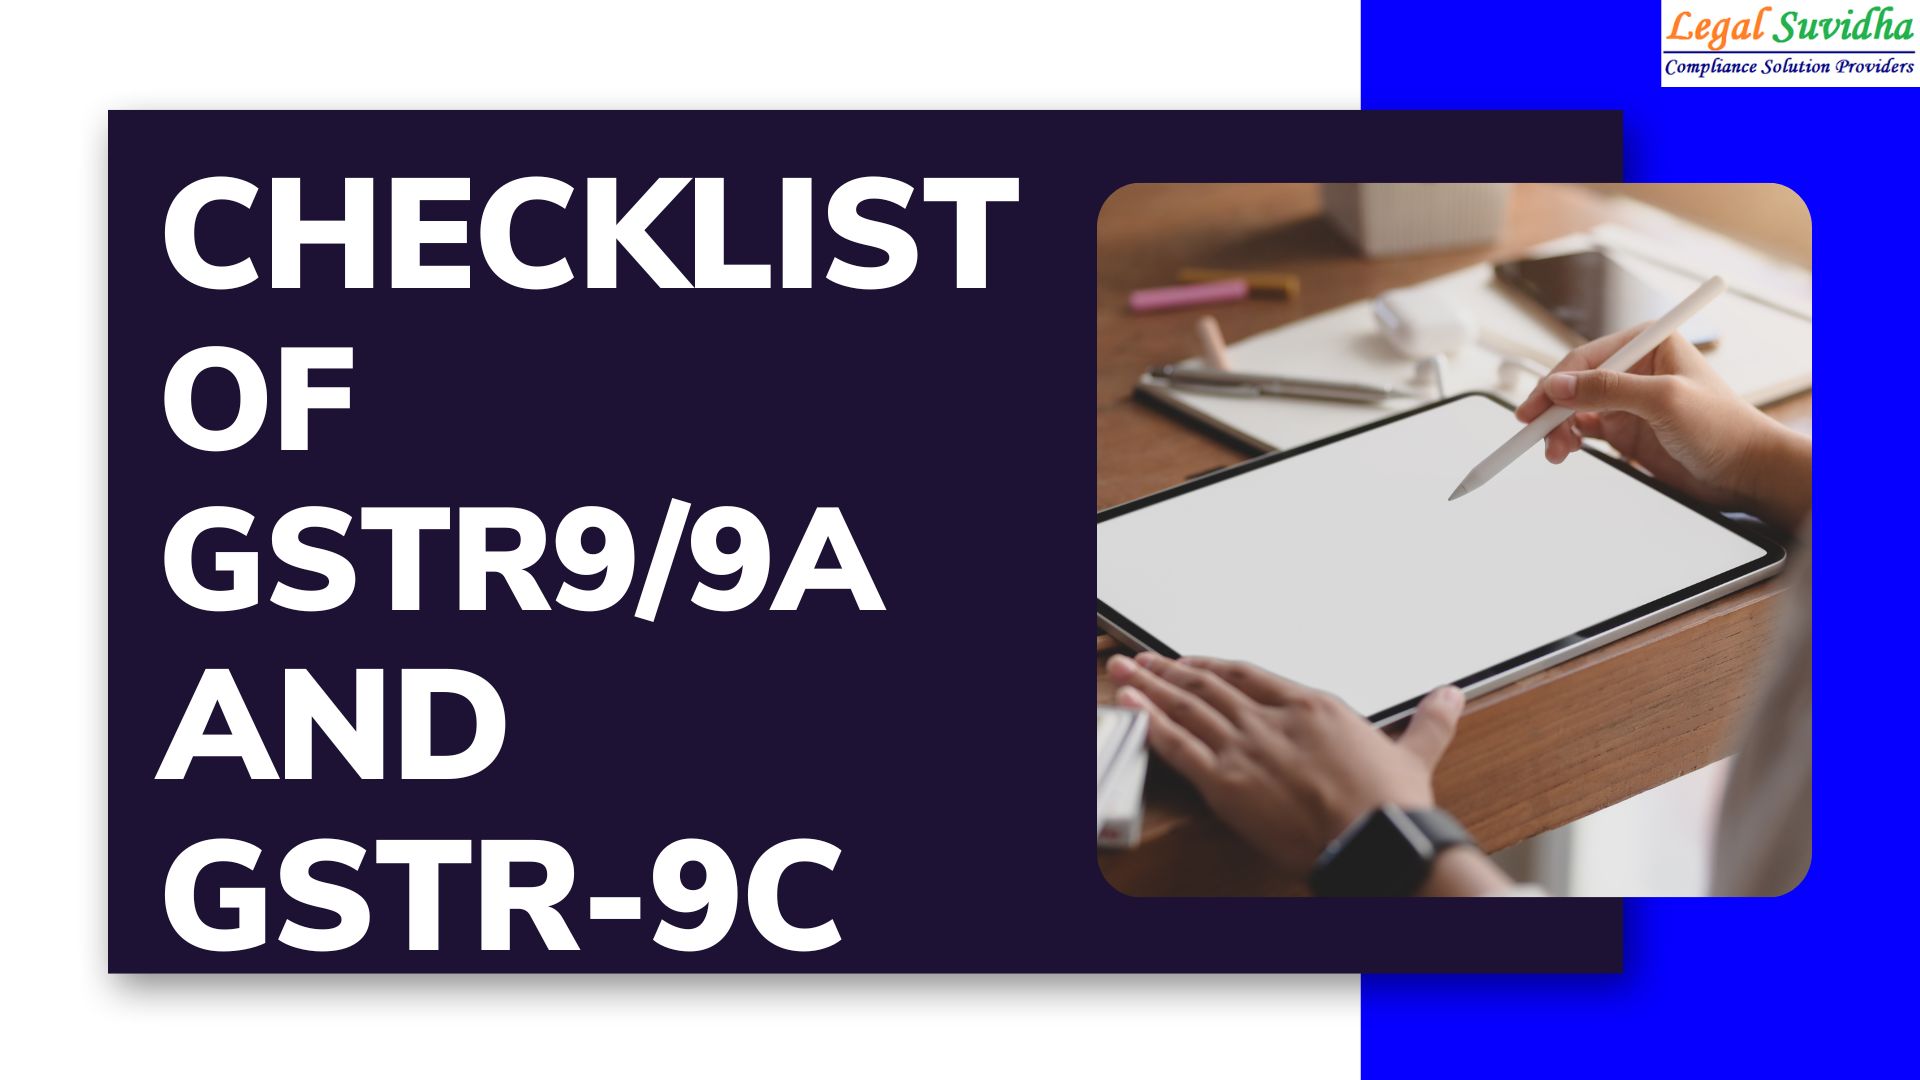 Checklist of GSTR-9/9A & GSTR-9C